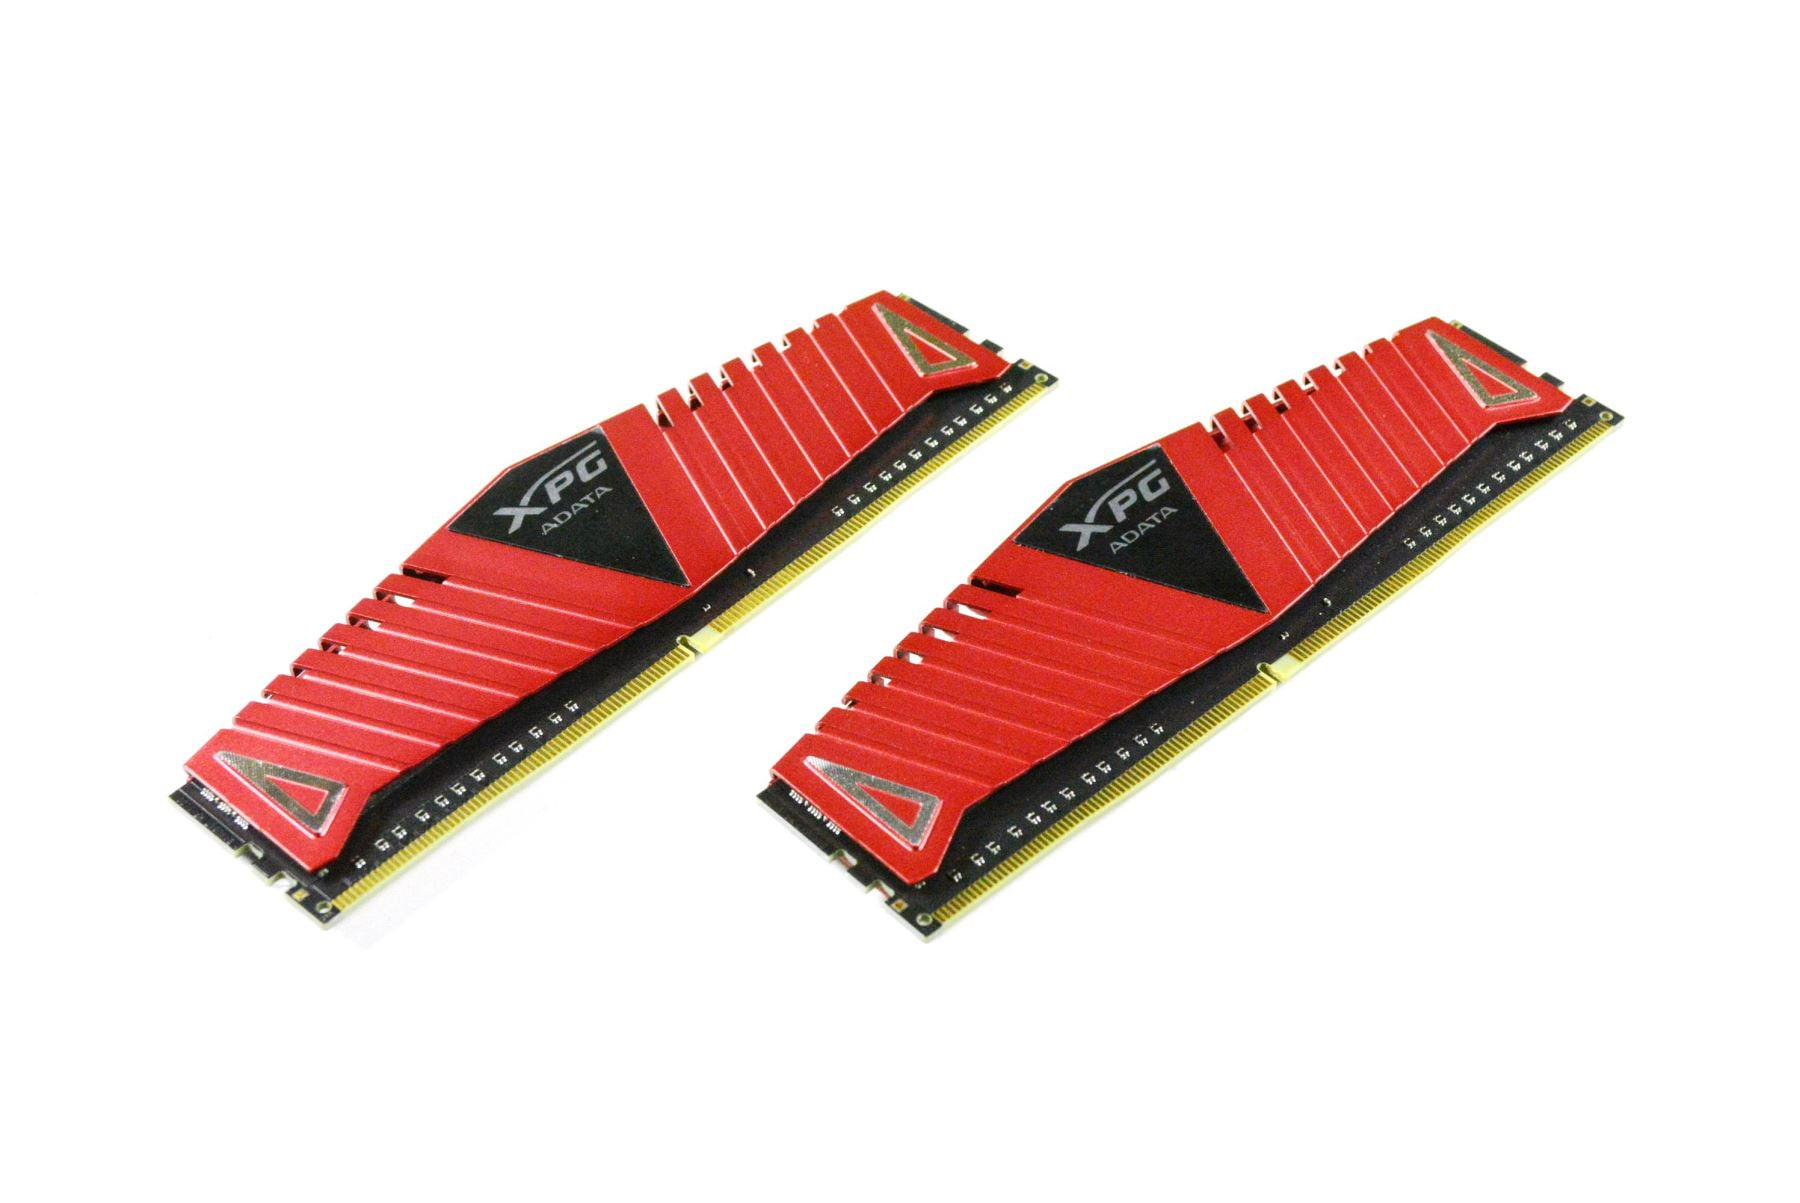 AData XPG 16GB (2 x 8GB) DDR4 2400MHz AX4U240038G16-BRZ Desktop RAM Memory  Used